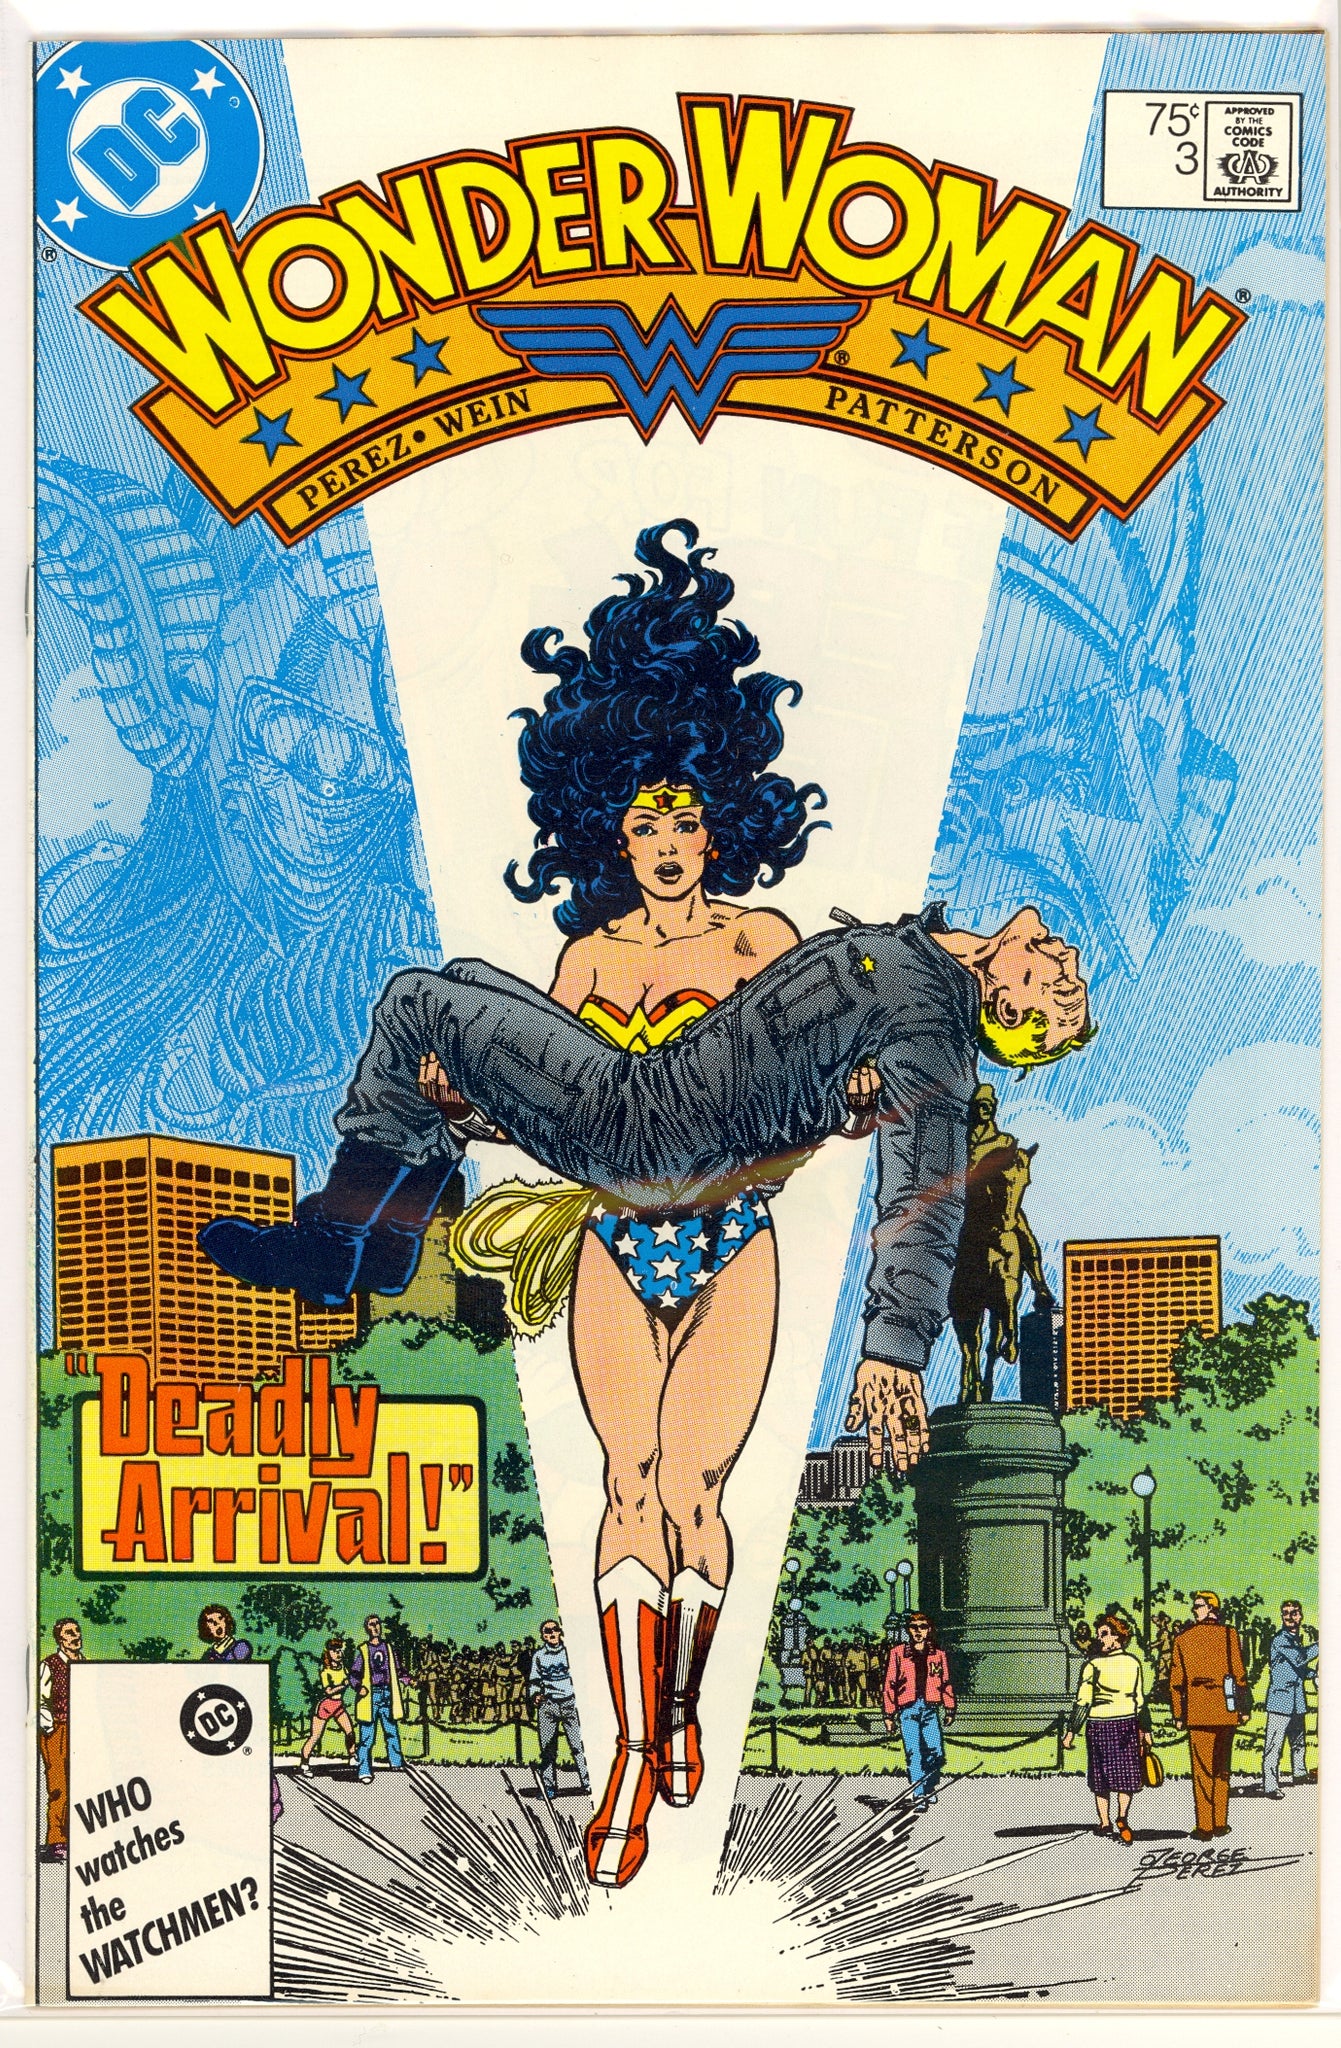 Wonder Woman #3 (1987) no month variant